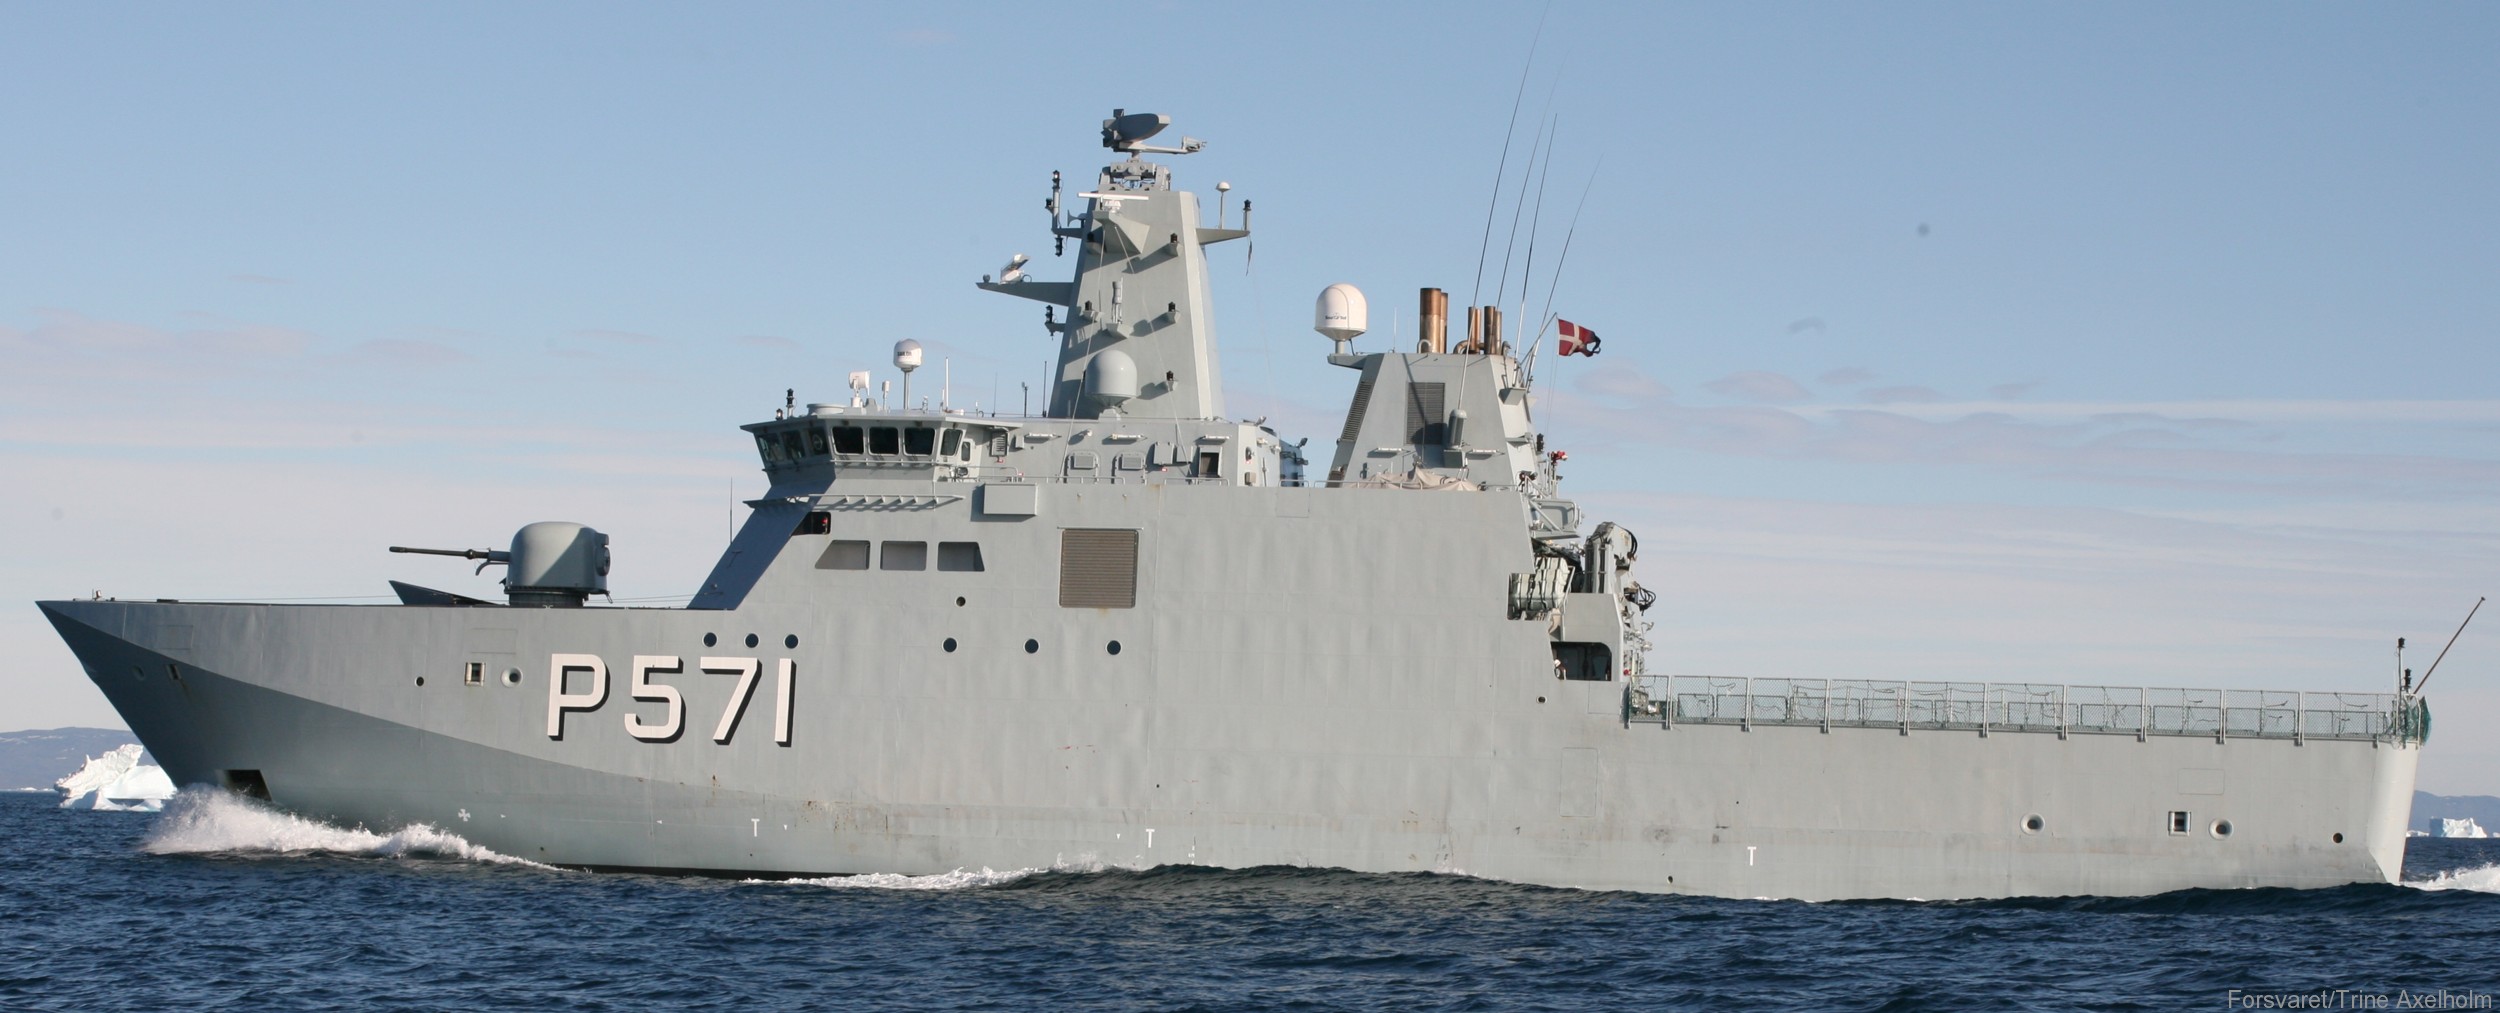 p-571 hdms ejnar mikkelsen knud rasmussen class offshore patrol vessel opv royal danish navy inspektionsfartøj 25